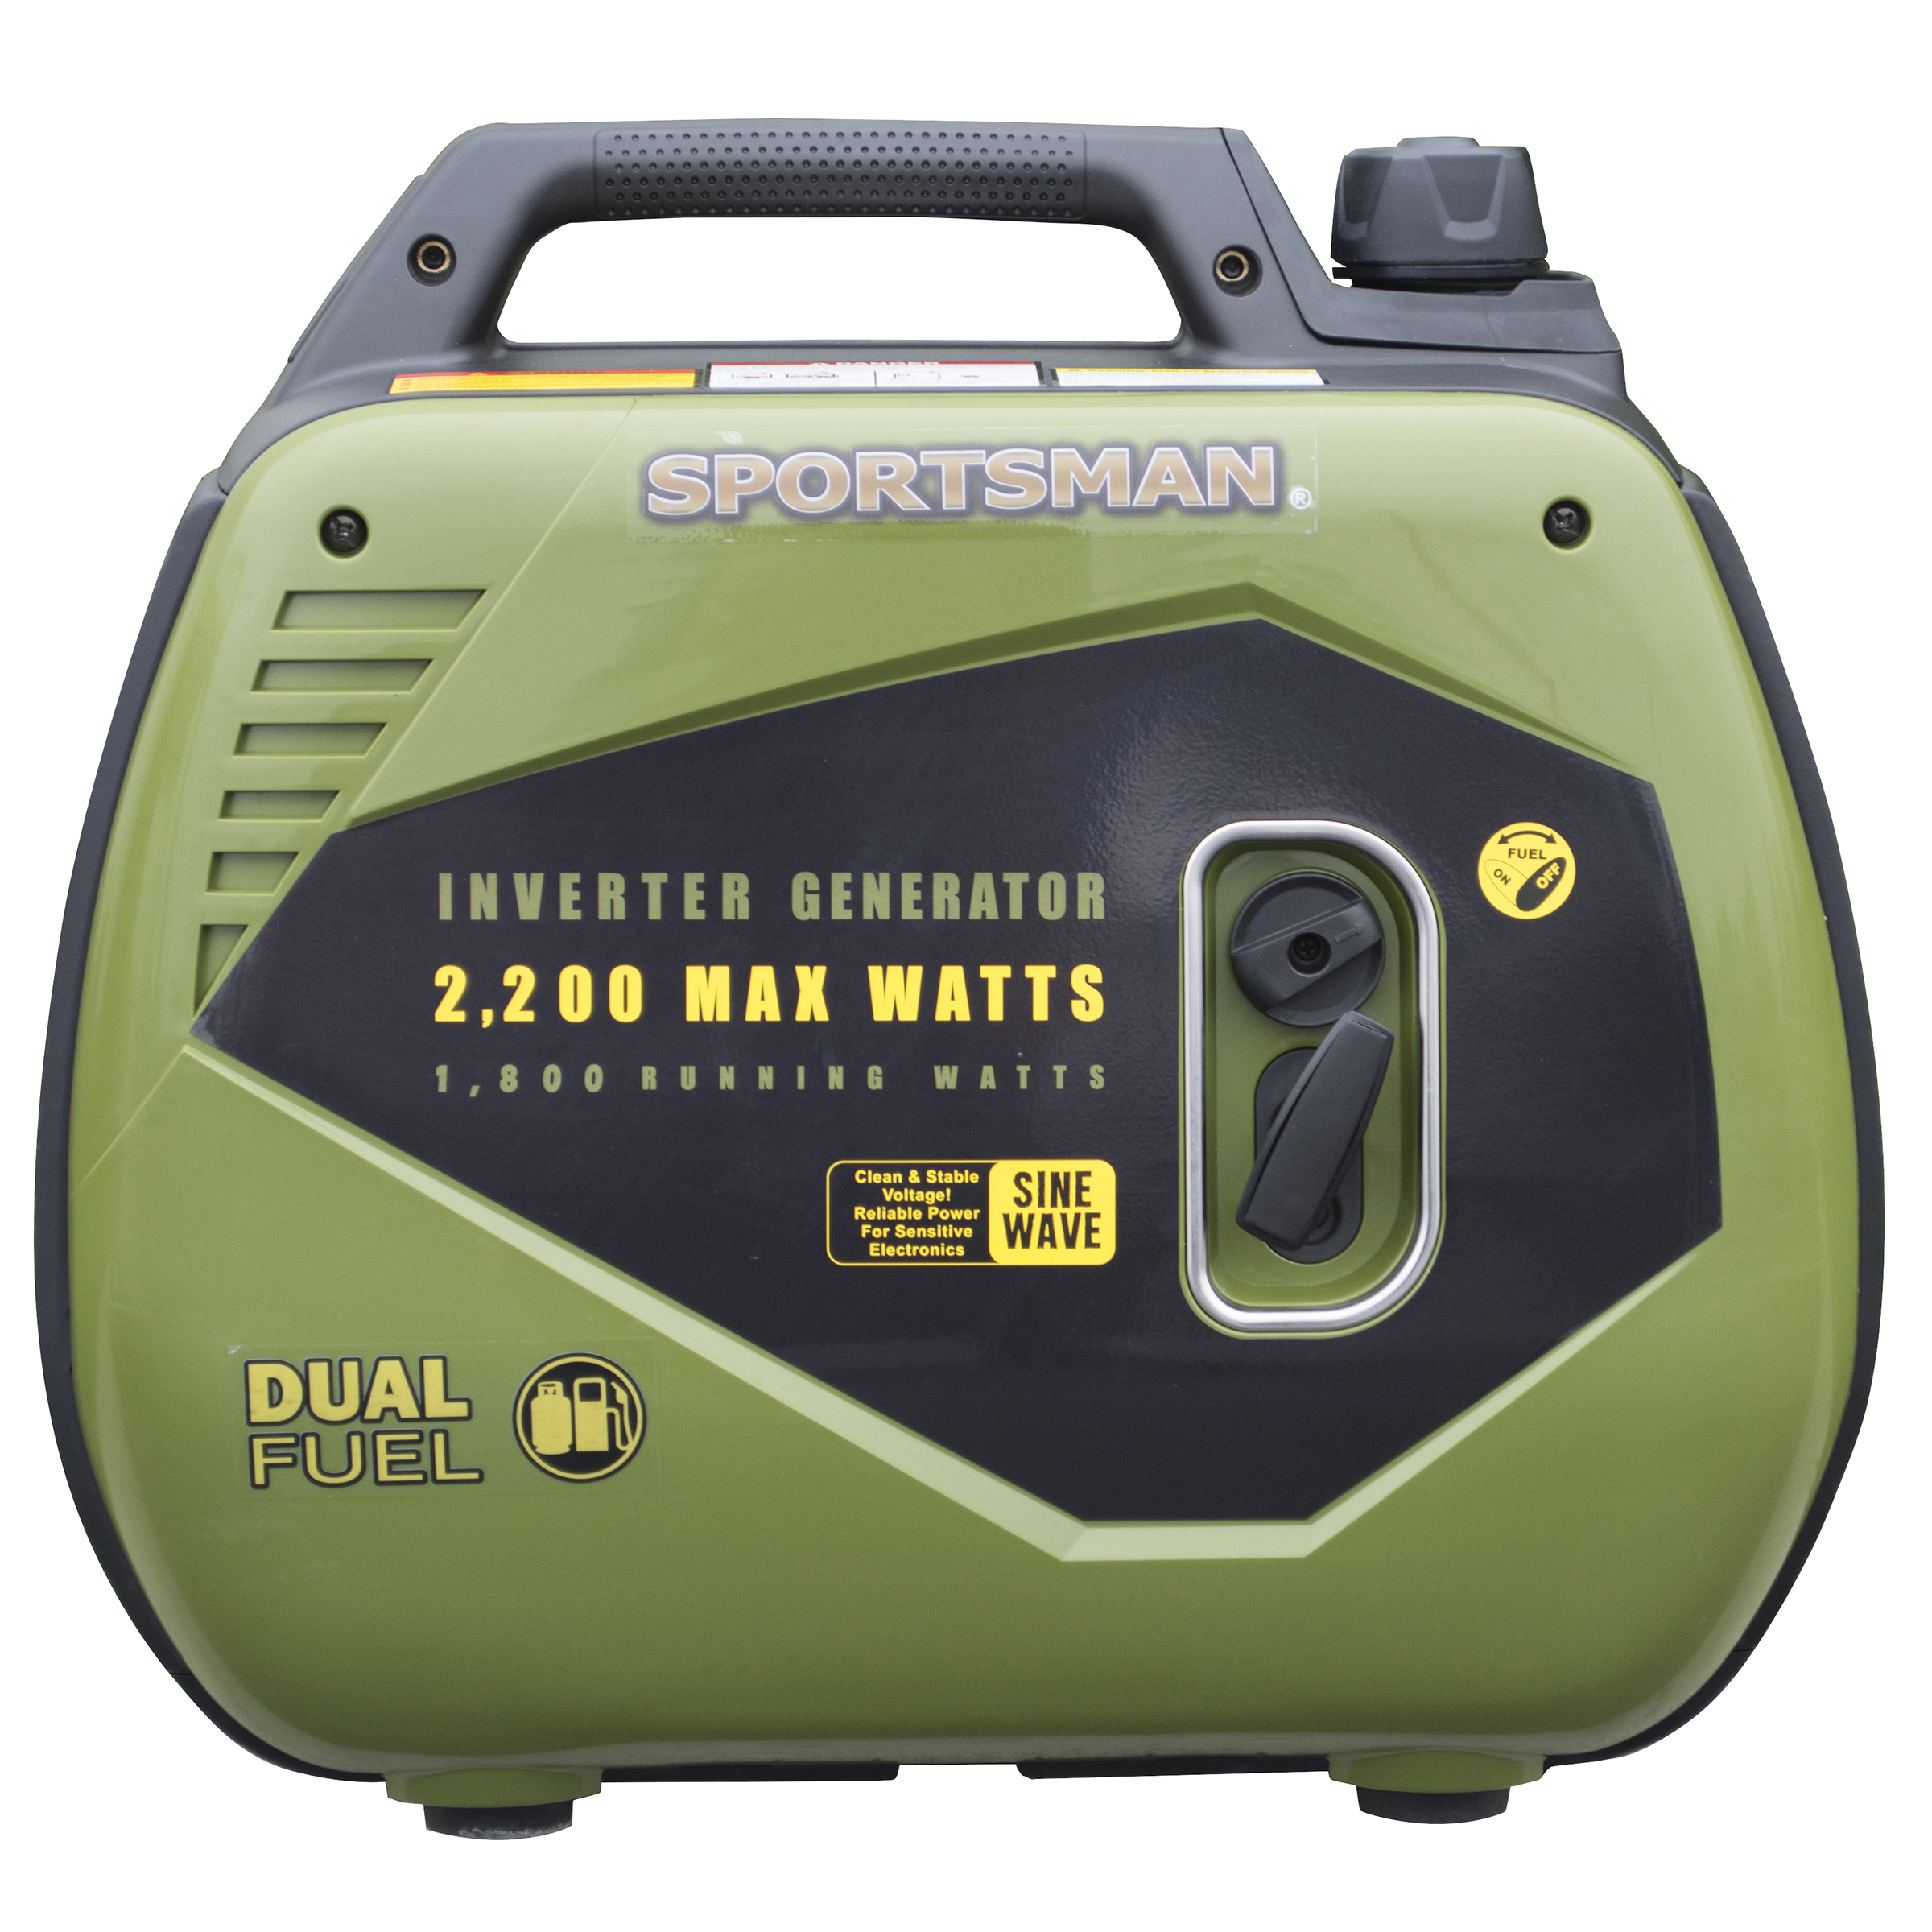 Sportsman 2200 Watt Dual Fuel Inverter Generator for Sensitive Electronics - image 5 of 9